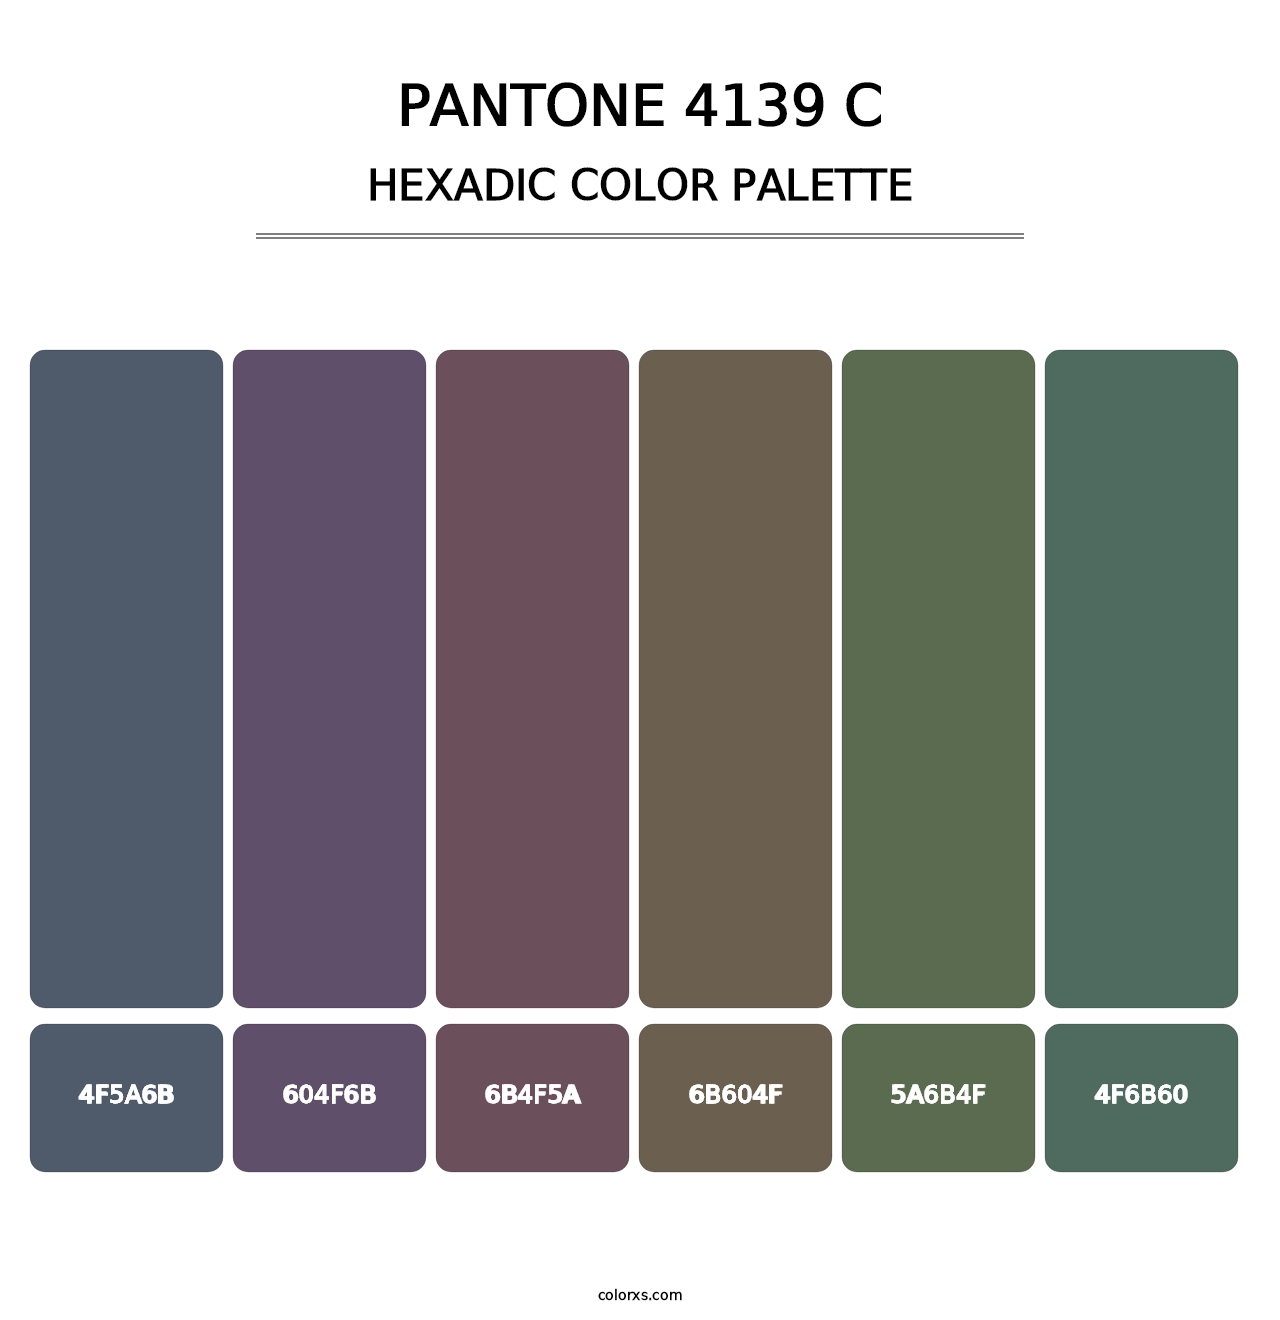 PANTONE 4139 C - Hexadic Color Palette